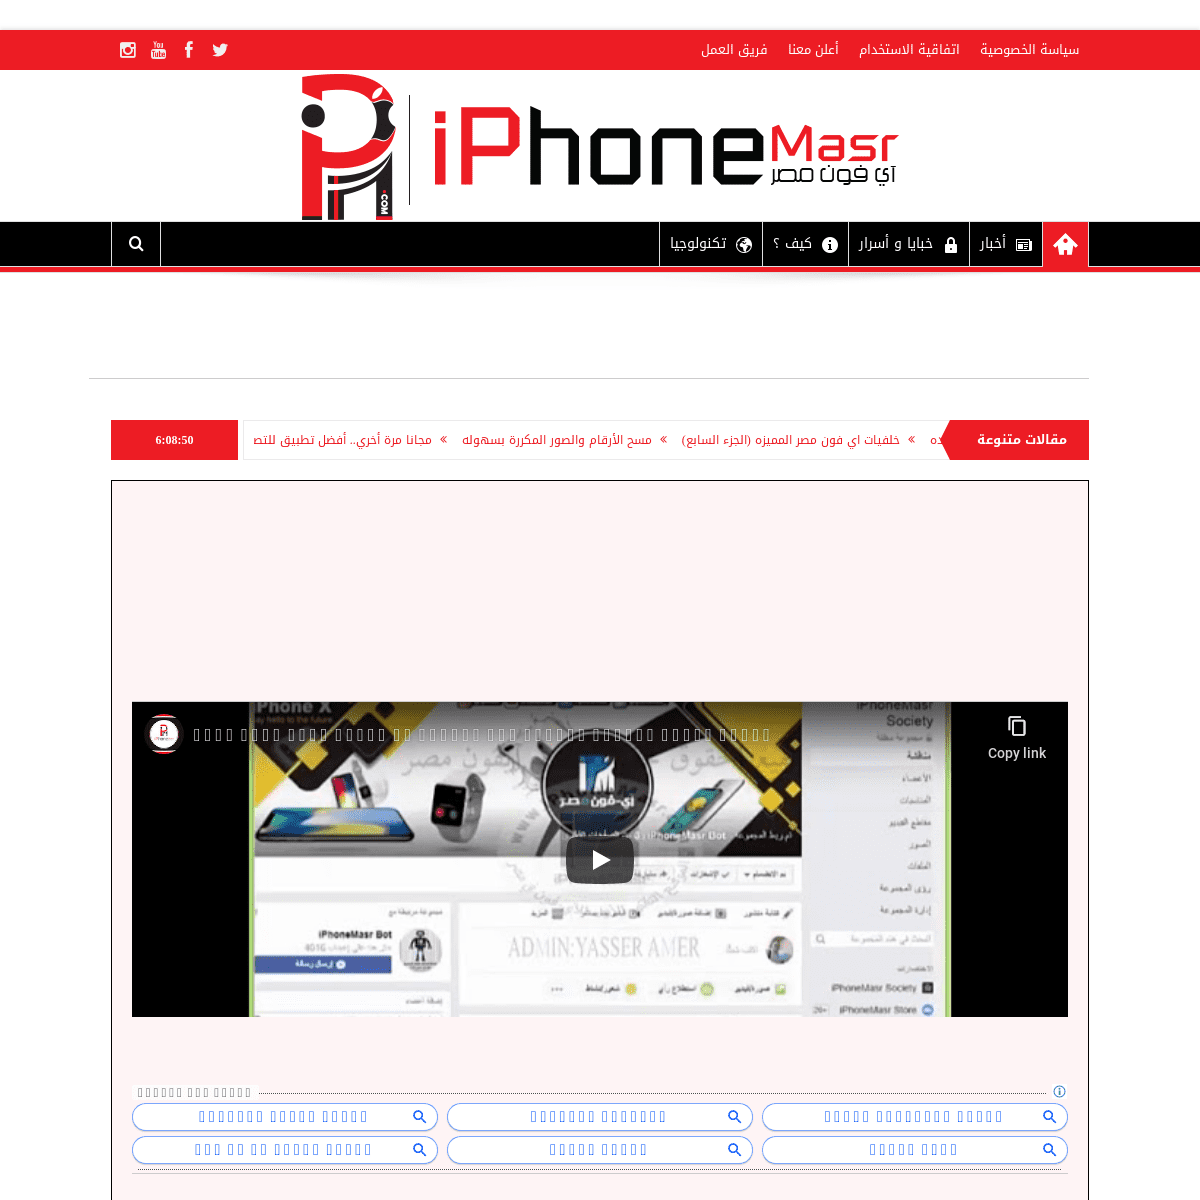 A complete backup of iphonemasr.com